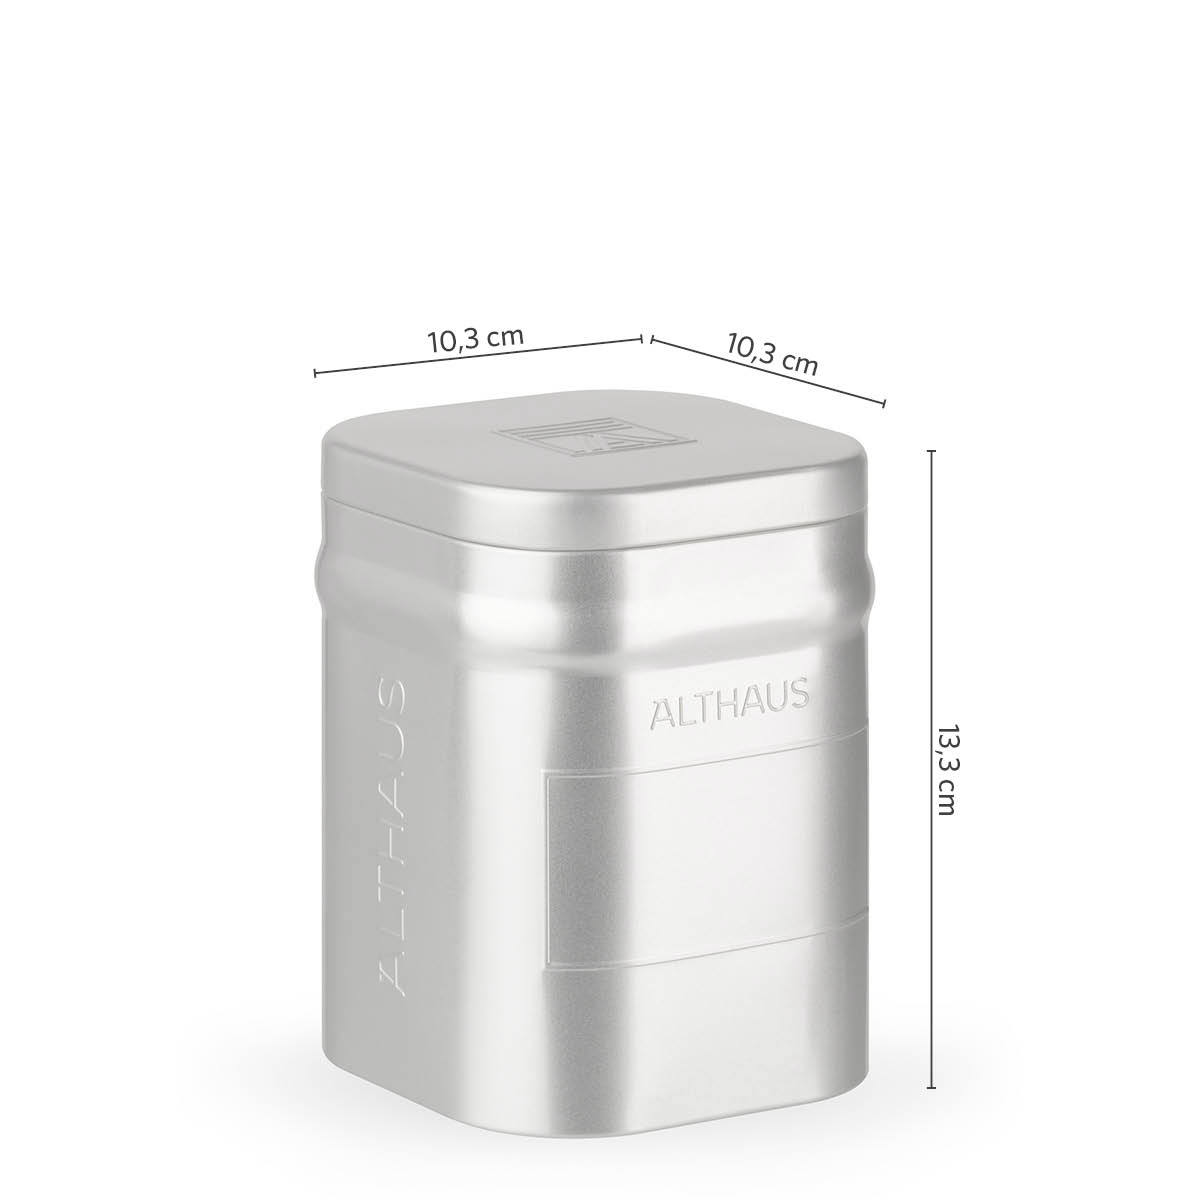 Storage tin for loose tea, small